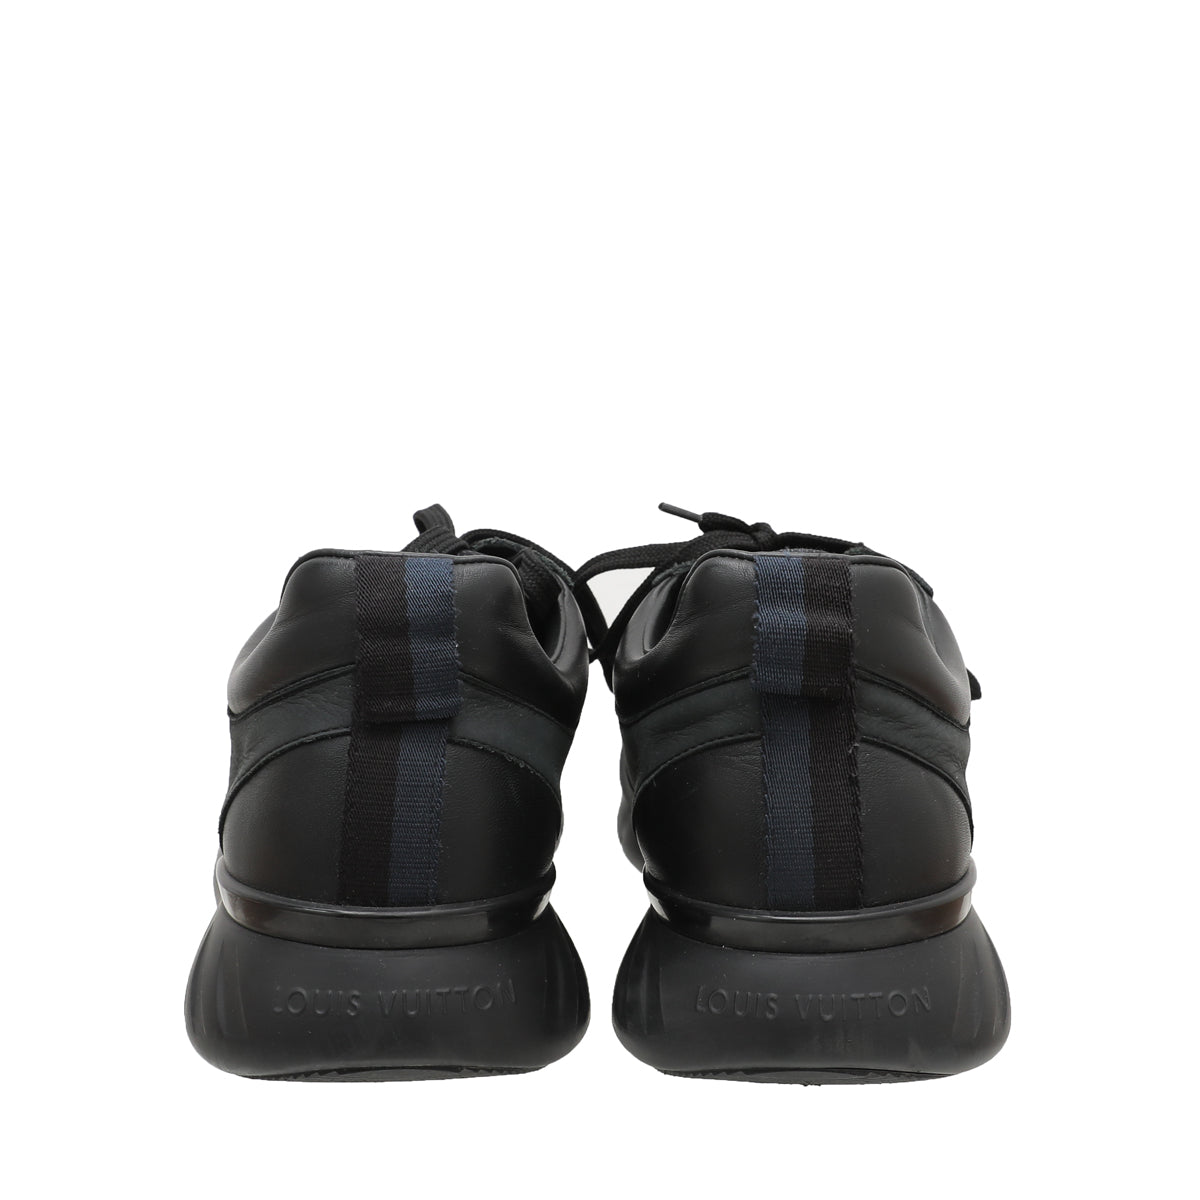 Louis Vuitton Black/Green Leather and Nylon Fastlane Sneakers Size